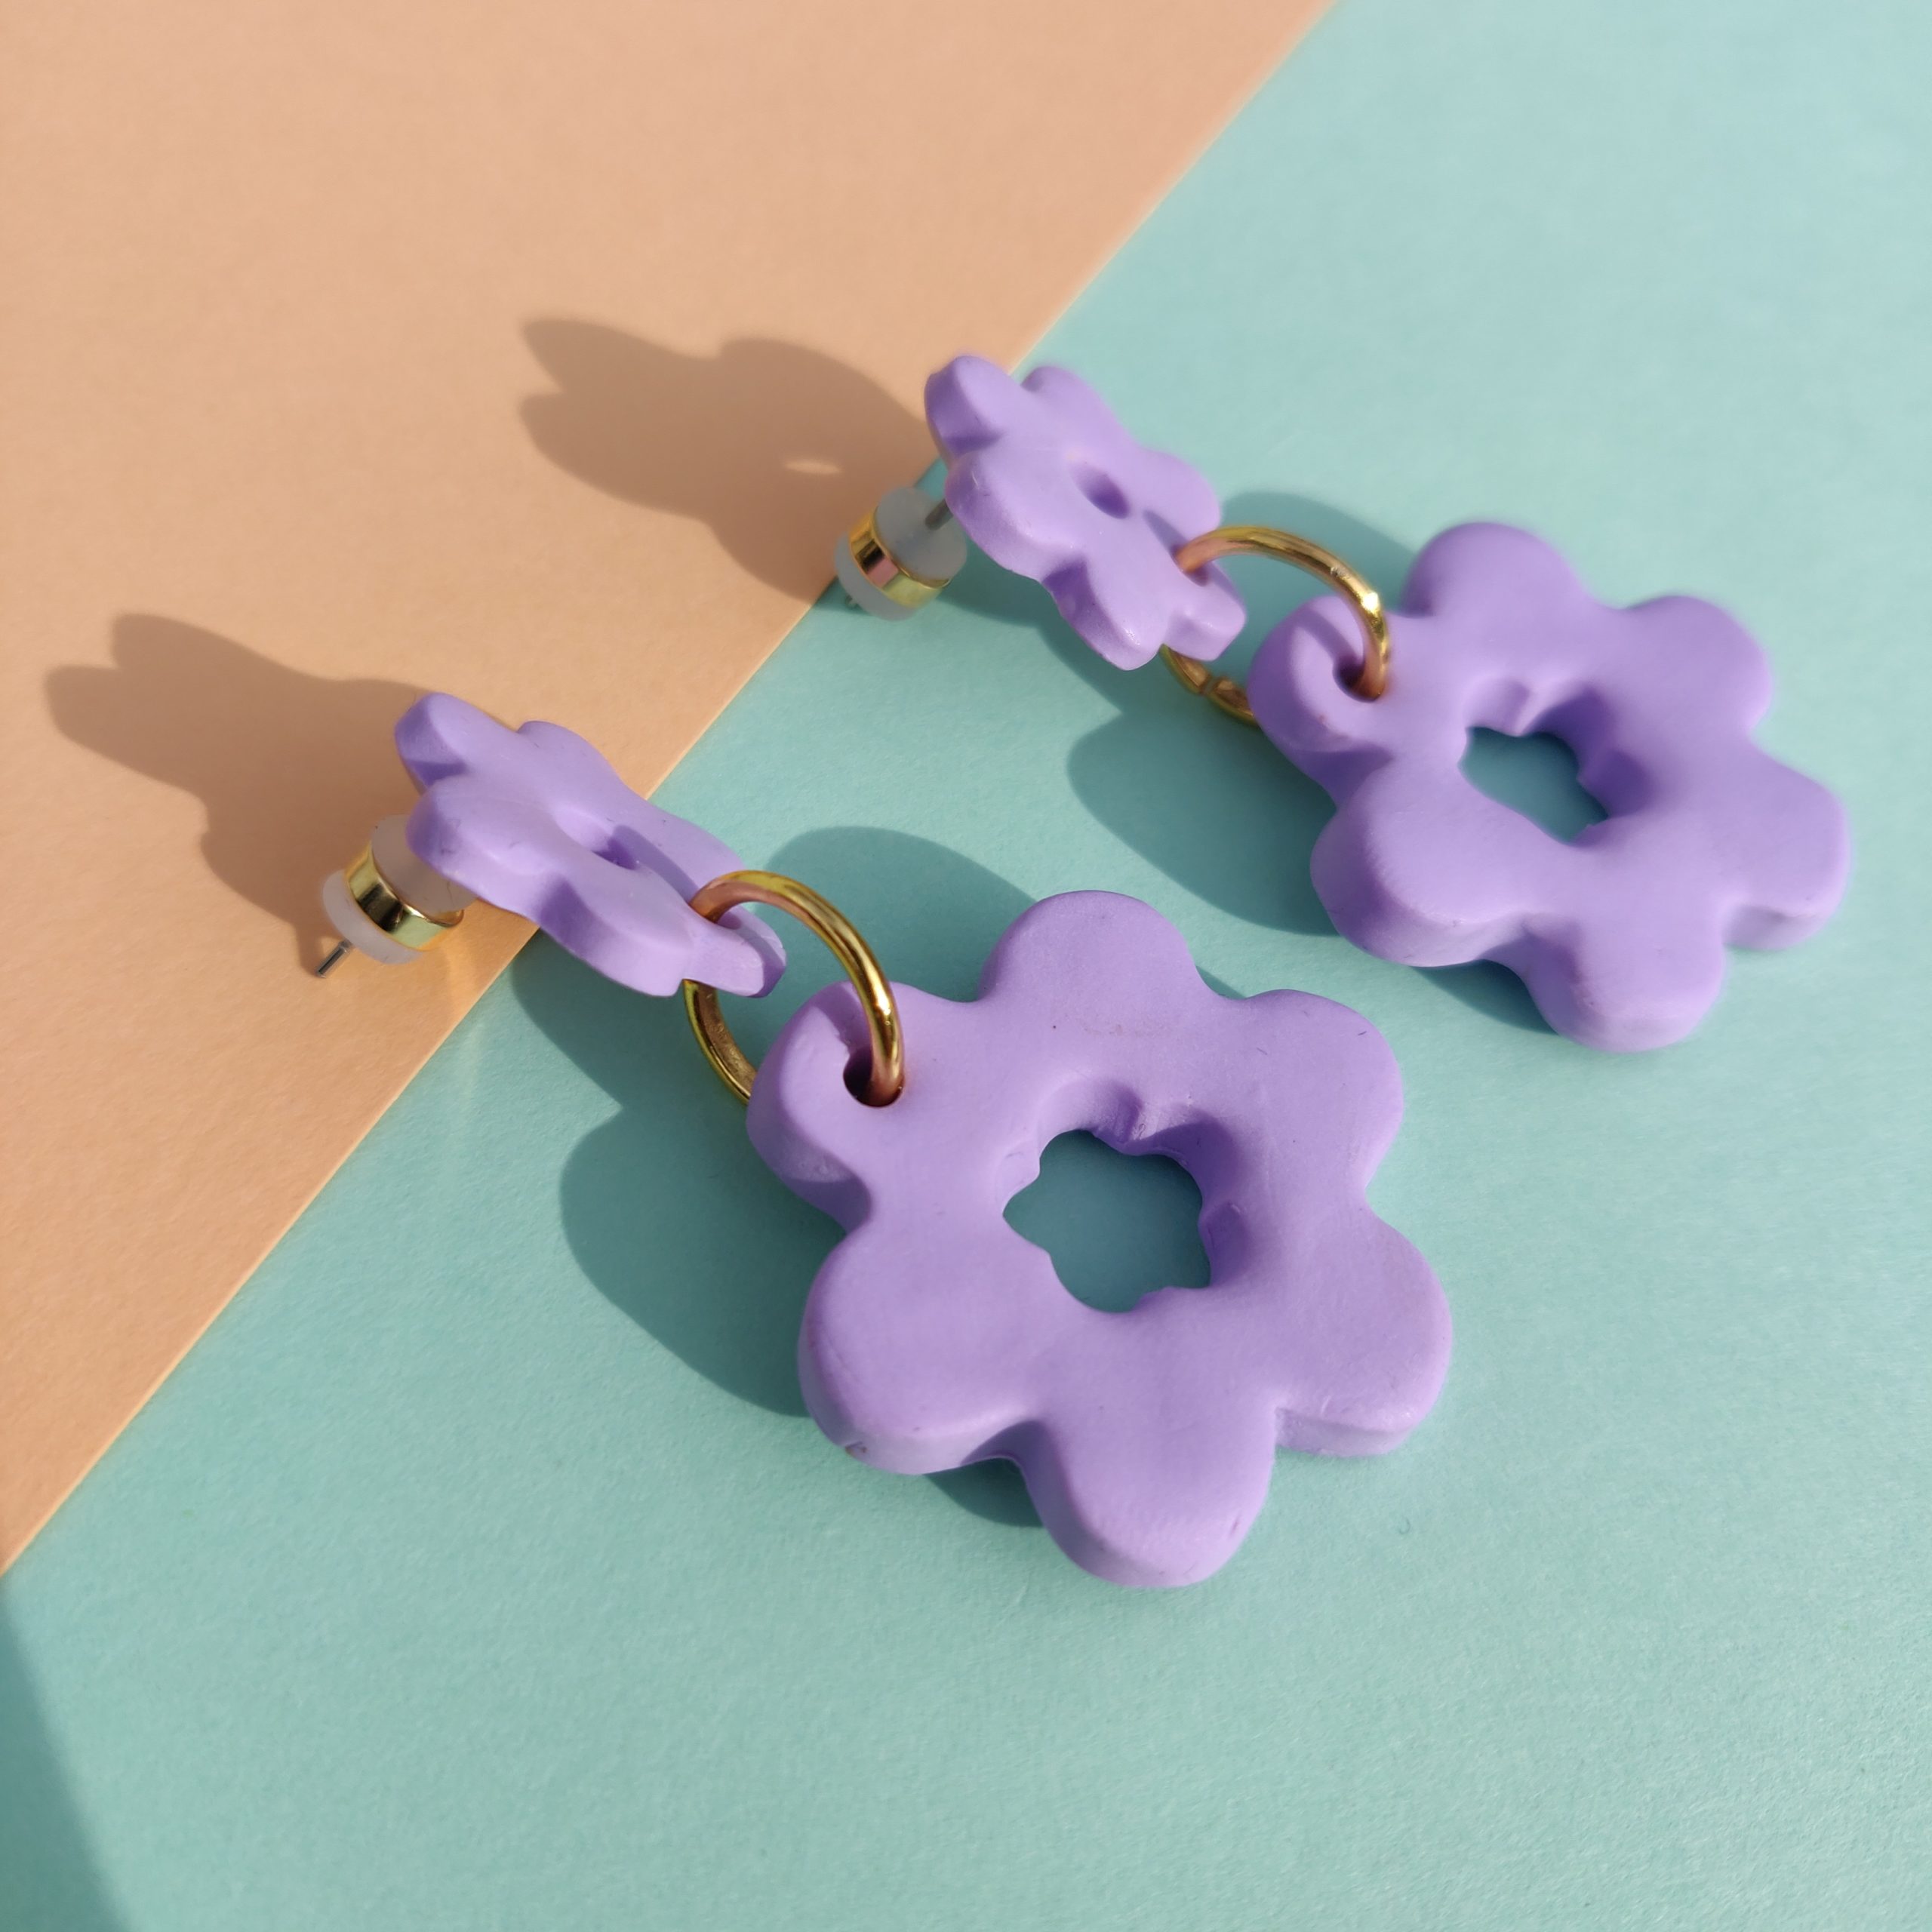 The Flower Power Lilac Earrings - Sutainably Handmade Polymer Clay Earrings